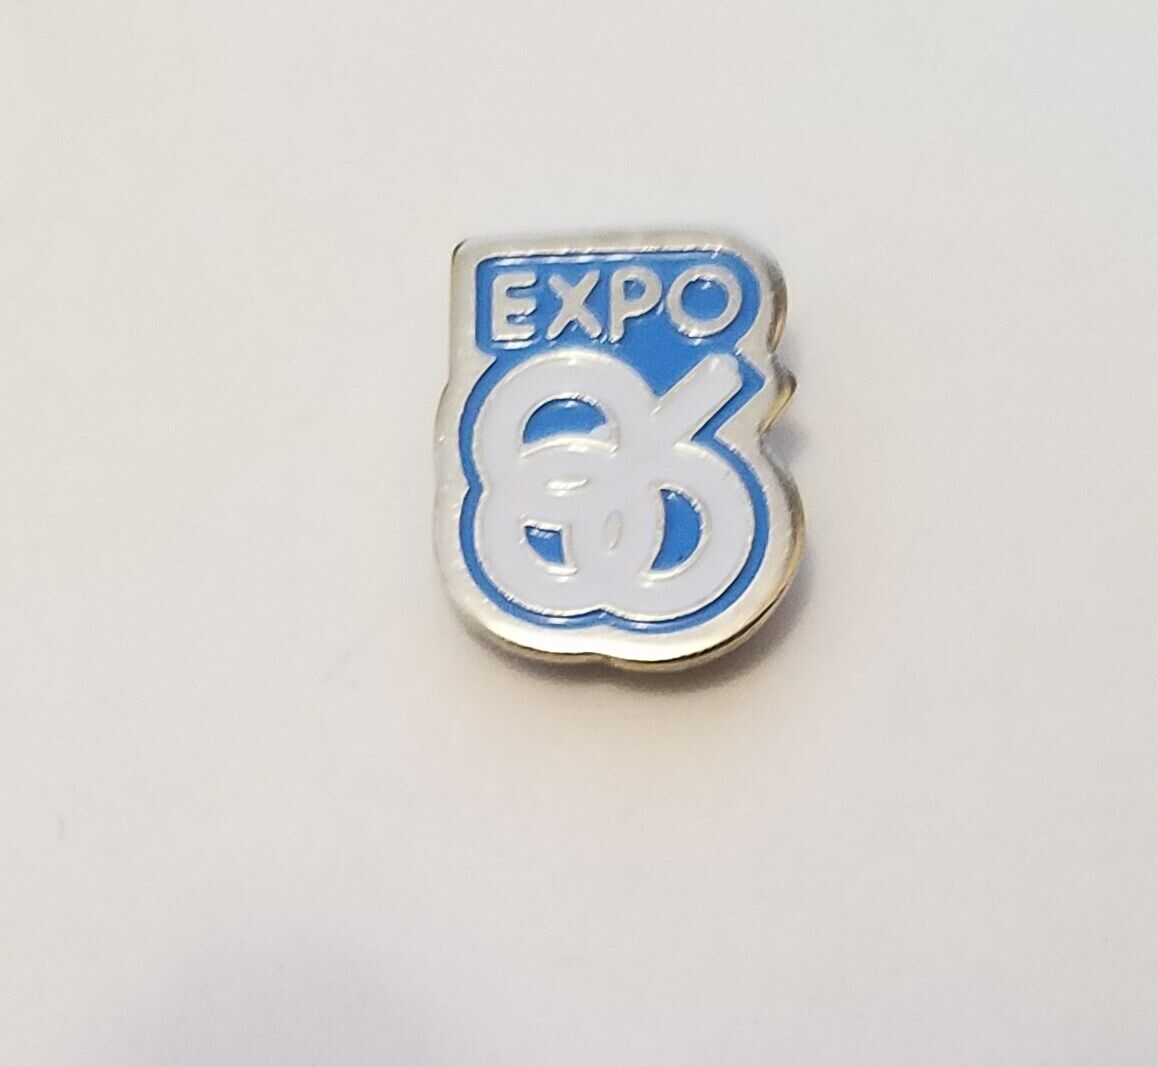 WORLD 1986 EXPO - VANCOUVER BRITISH COLUMBIA CANADA PIN #2